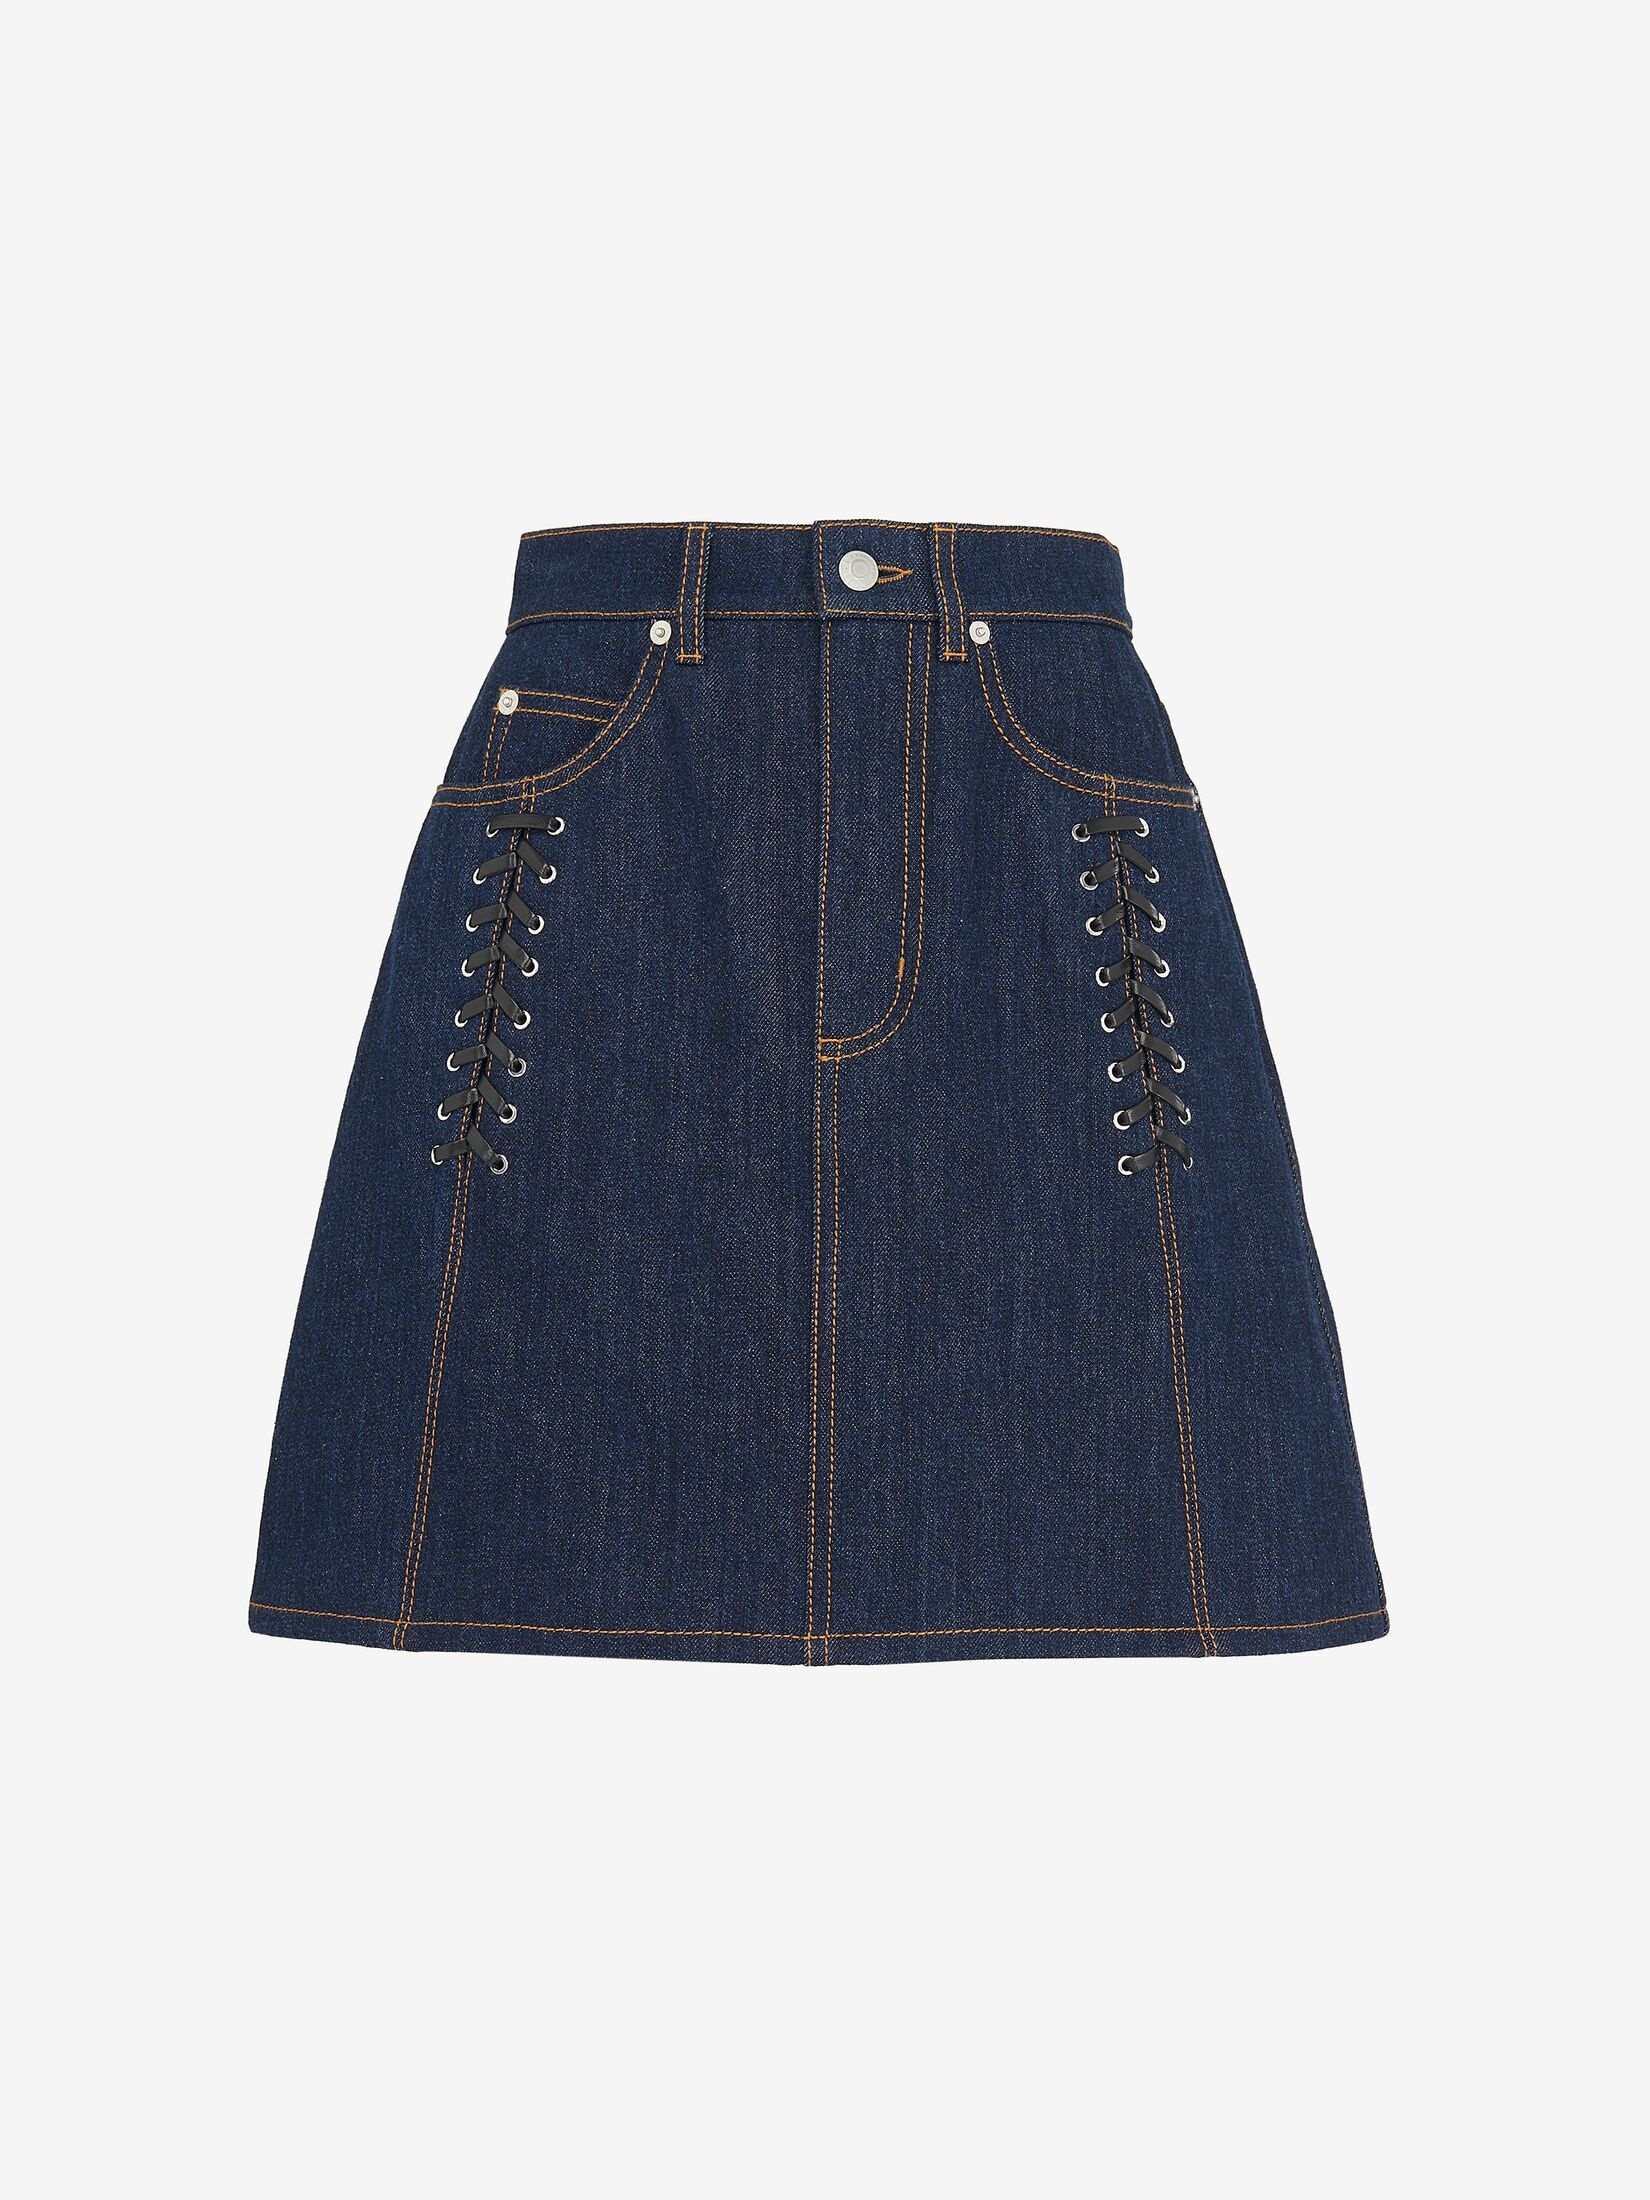 Women's Lace Detail Denim Mini Skirt in Denim - 1